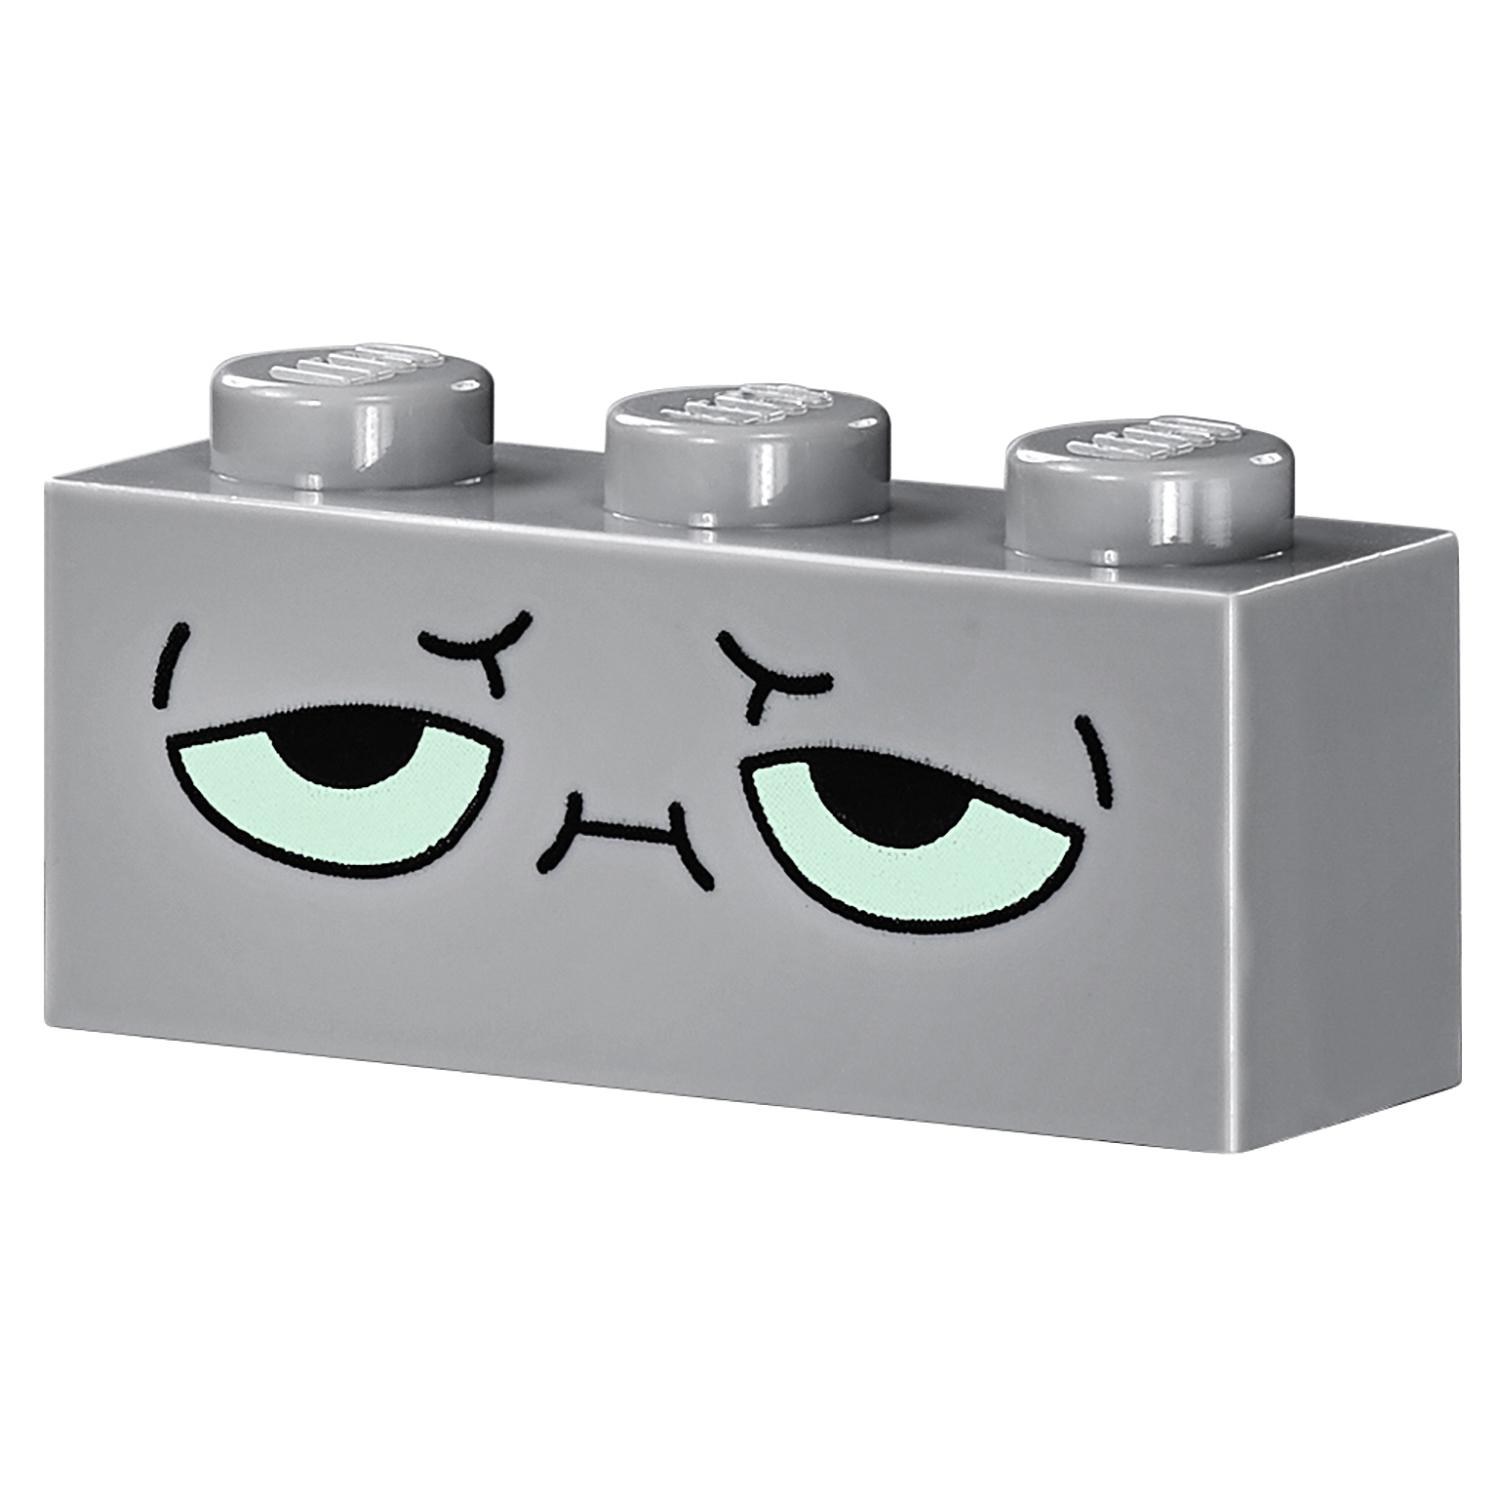 Lego Unikitty 41455 Коробка кубиков для творческого конструирования «Королевство»